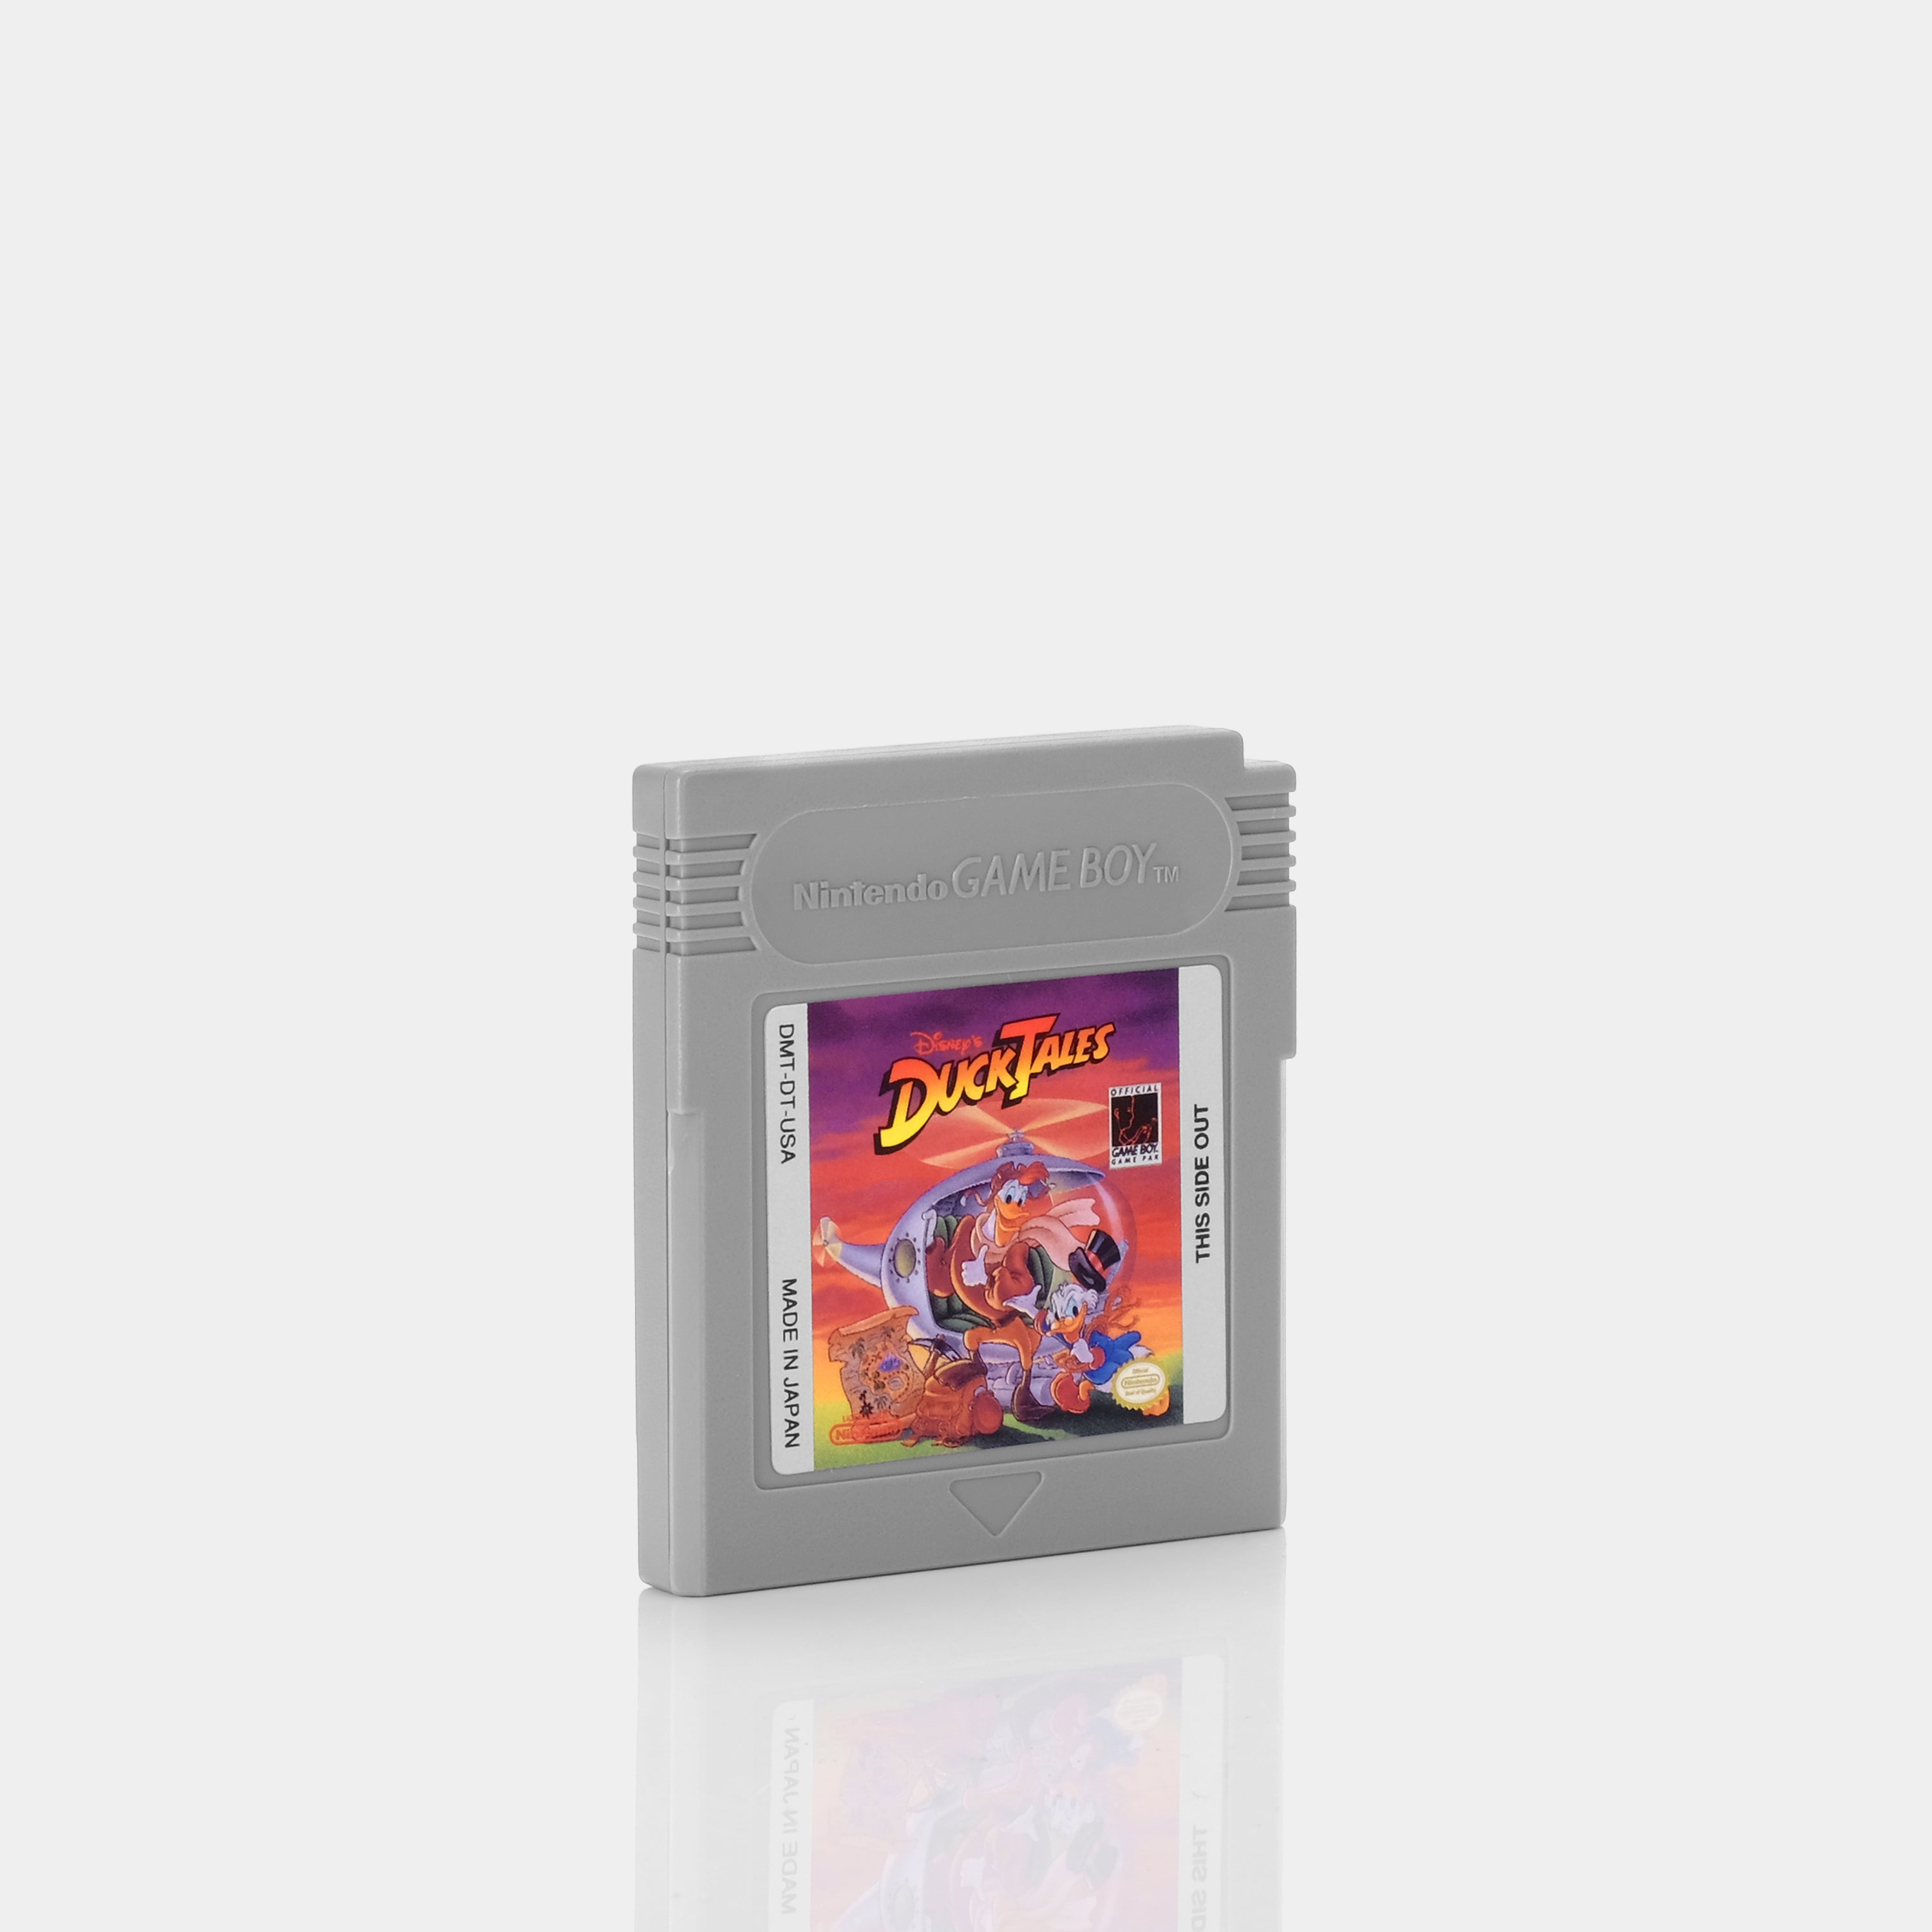 Disney's DuckTales Game Boy Game